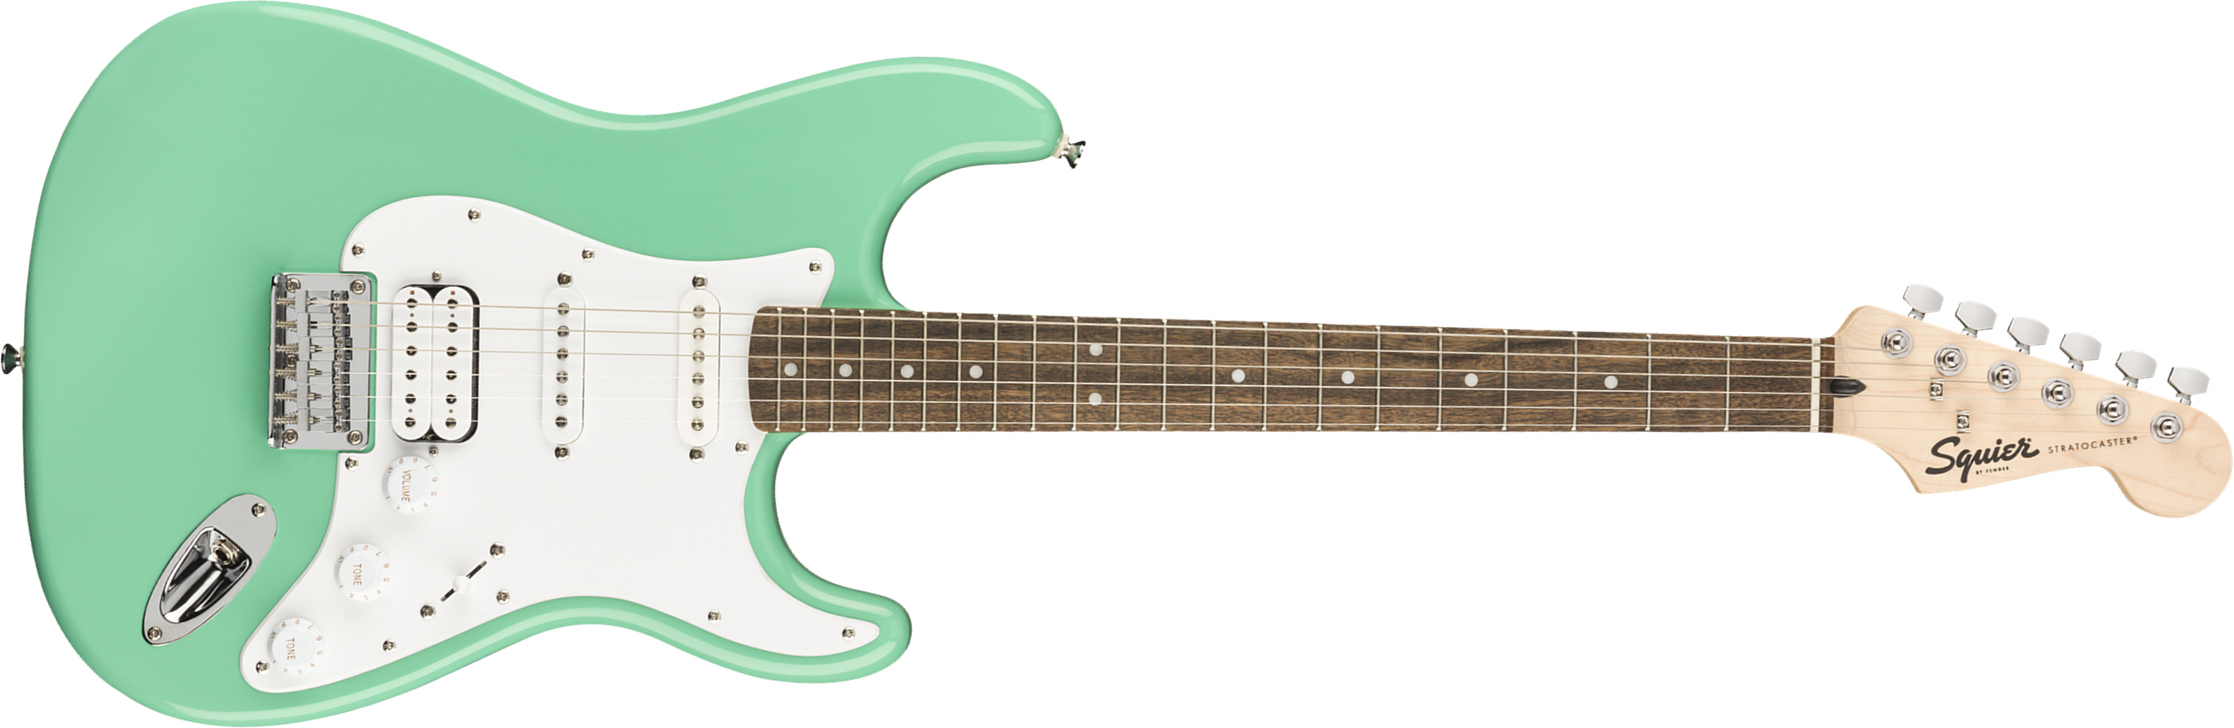 Squier Strat Bullet Fsr Ltd Hss Ht Lau - Sea Foam Green - Str shape electric guitar - Main picture